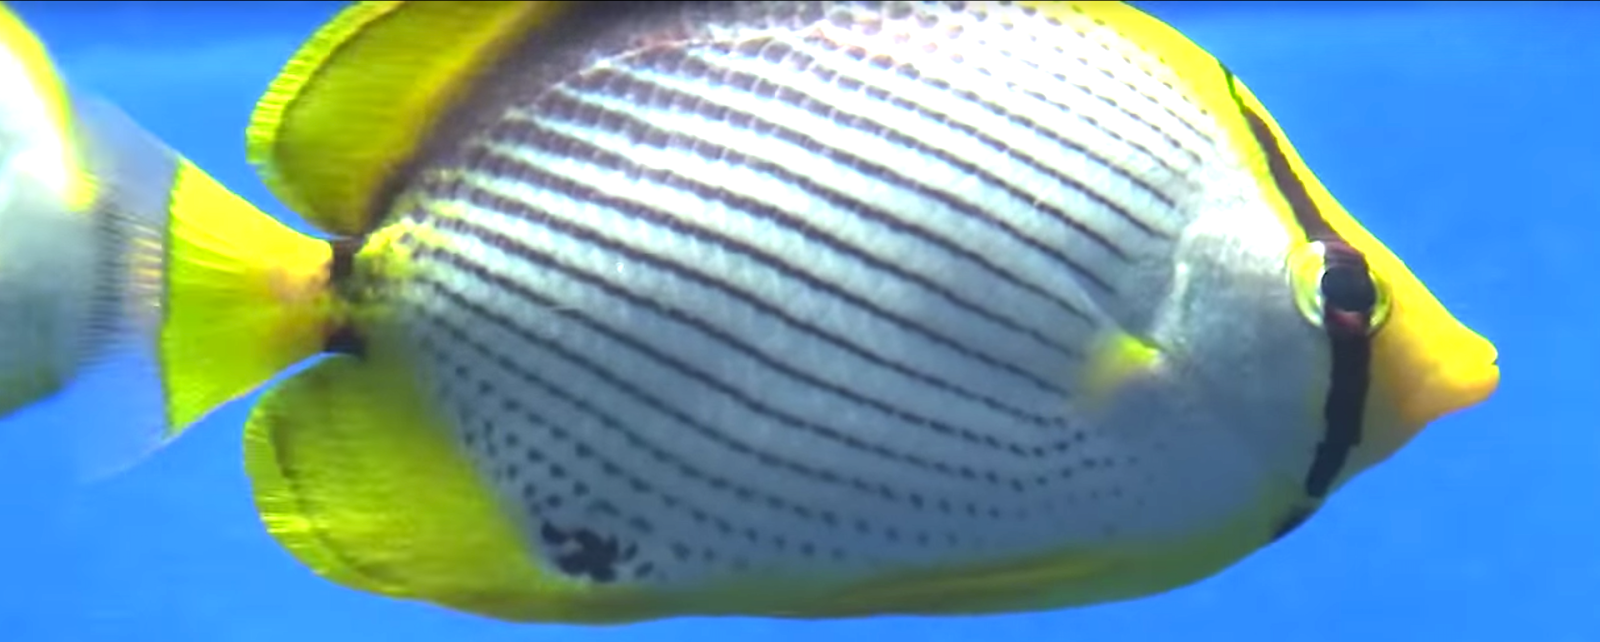 Aquarium Movies Japan Archive 生きている魚図鑑 アケボノチョウチョウウオ Blackback Butterflyfish Chaetodon Melannotus